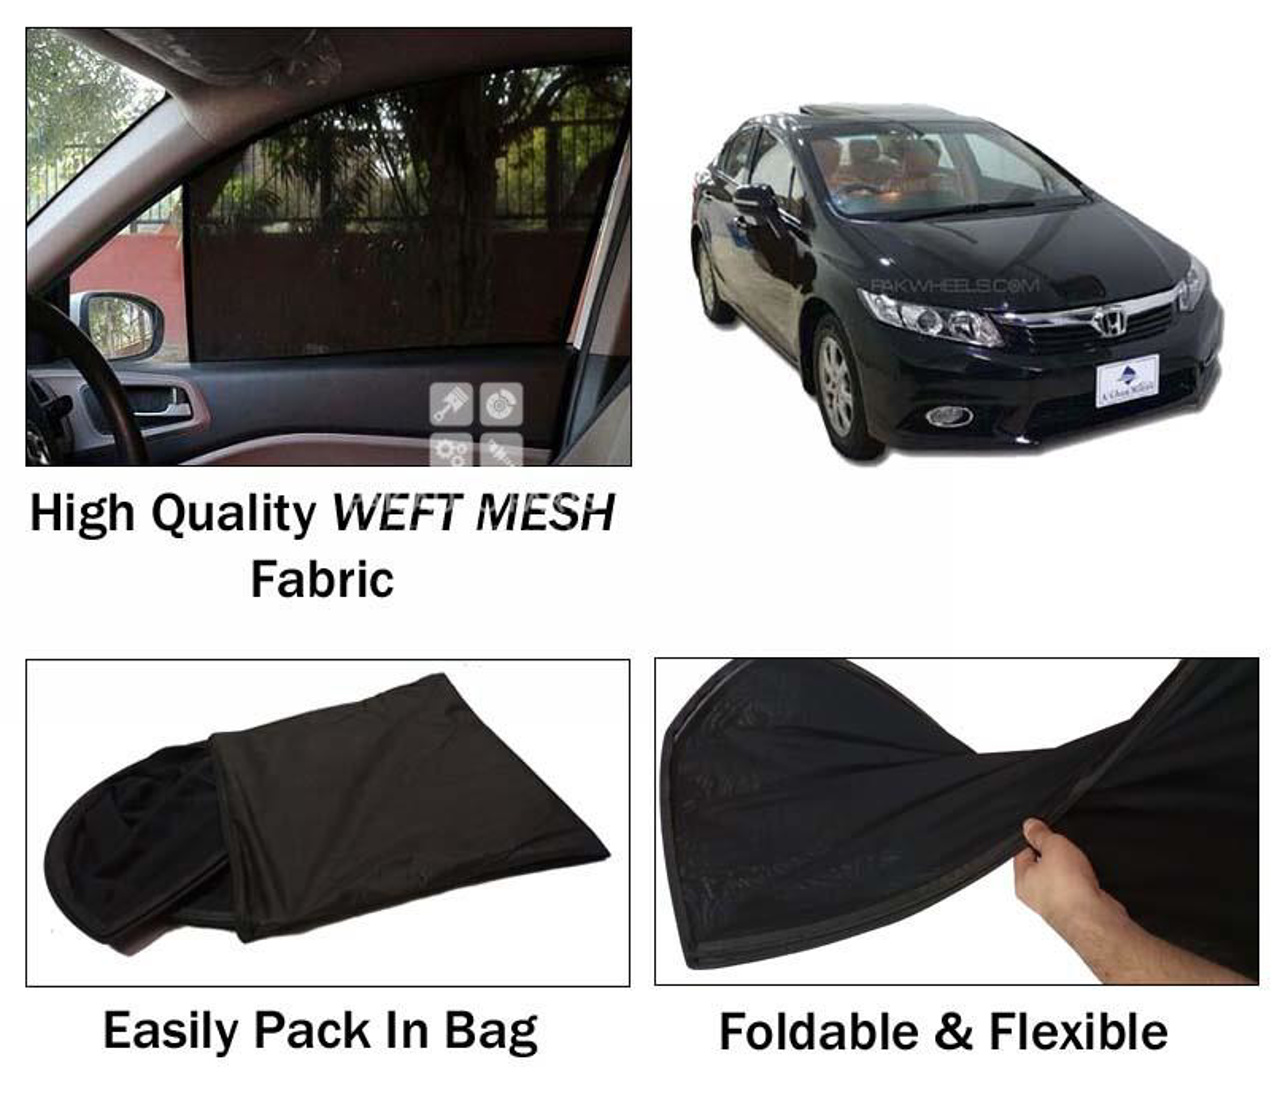 Picture of Honda Civic 2013 - 2015 Sun Shades | High Quality Weft Mesh Fabric | Foldable | Dark Black | Heat Proof | 4pcs Set